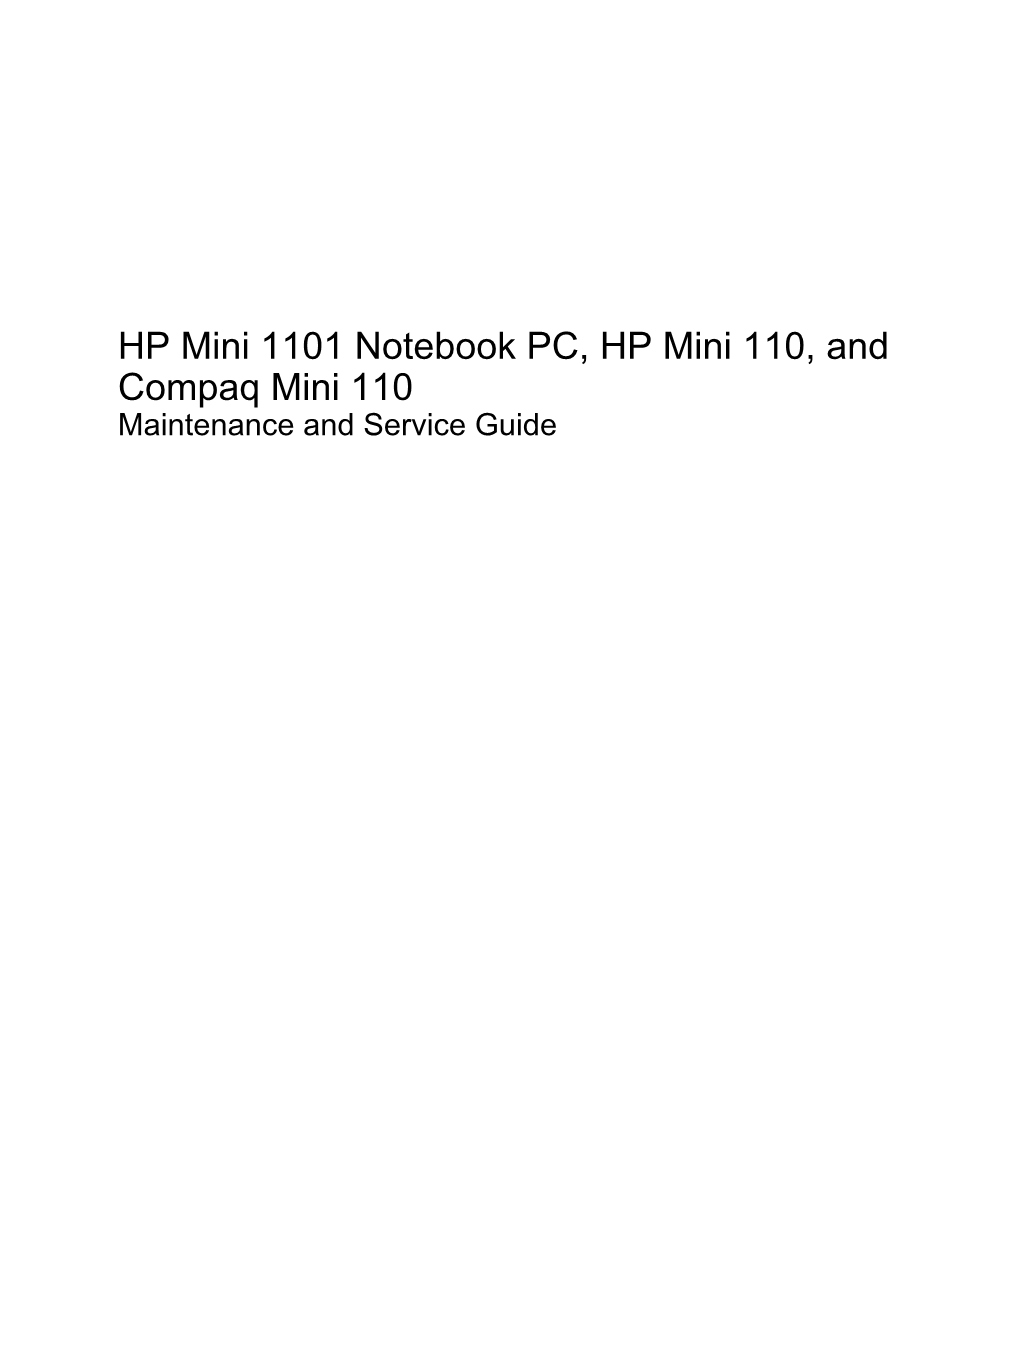 HP Mini 1101 Notebook PC, HP Mini 110, and Compaq Mini 110 Maintenance and Service Guide © Copyright 2009 Hewlett-Packard Development Company, L.P